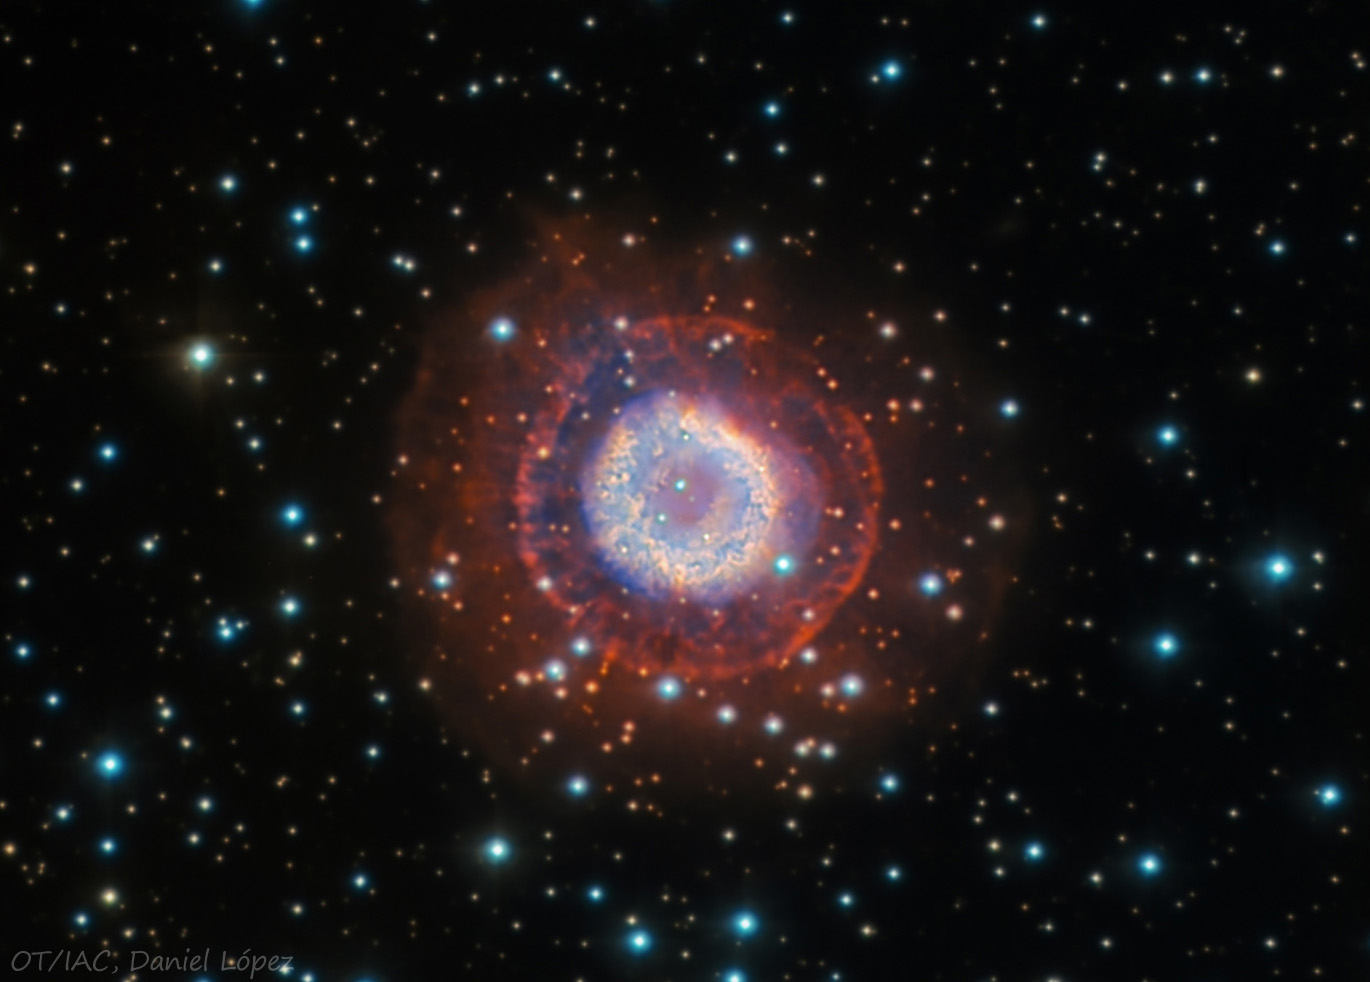 NGC2438_IAC80_DLopez